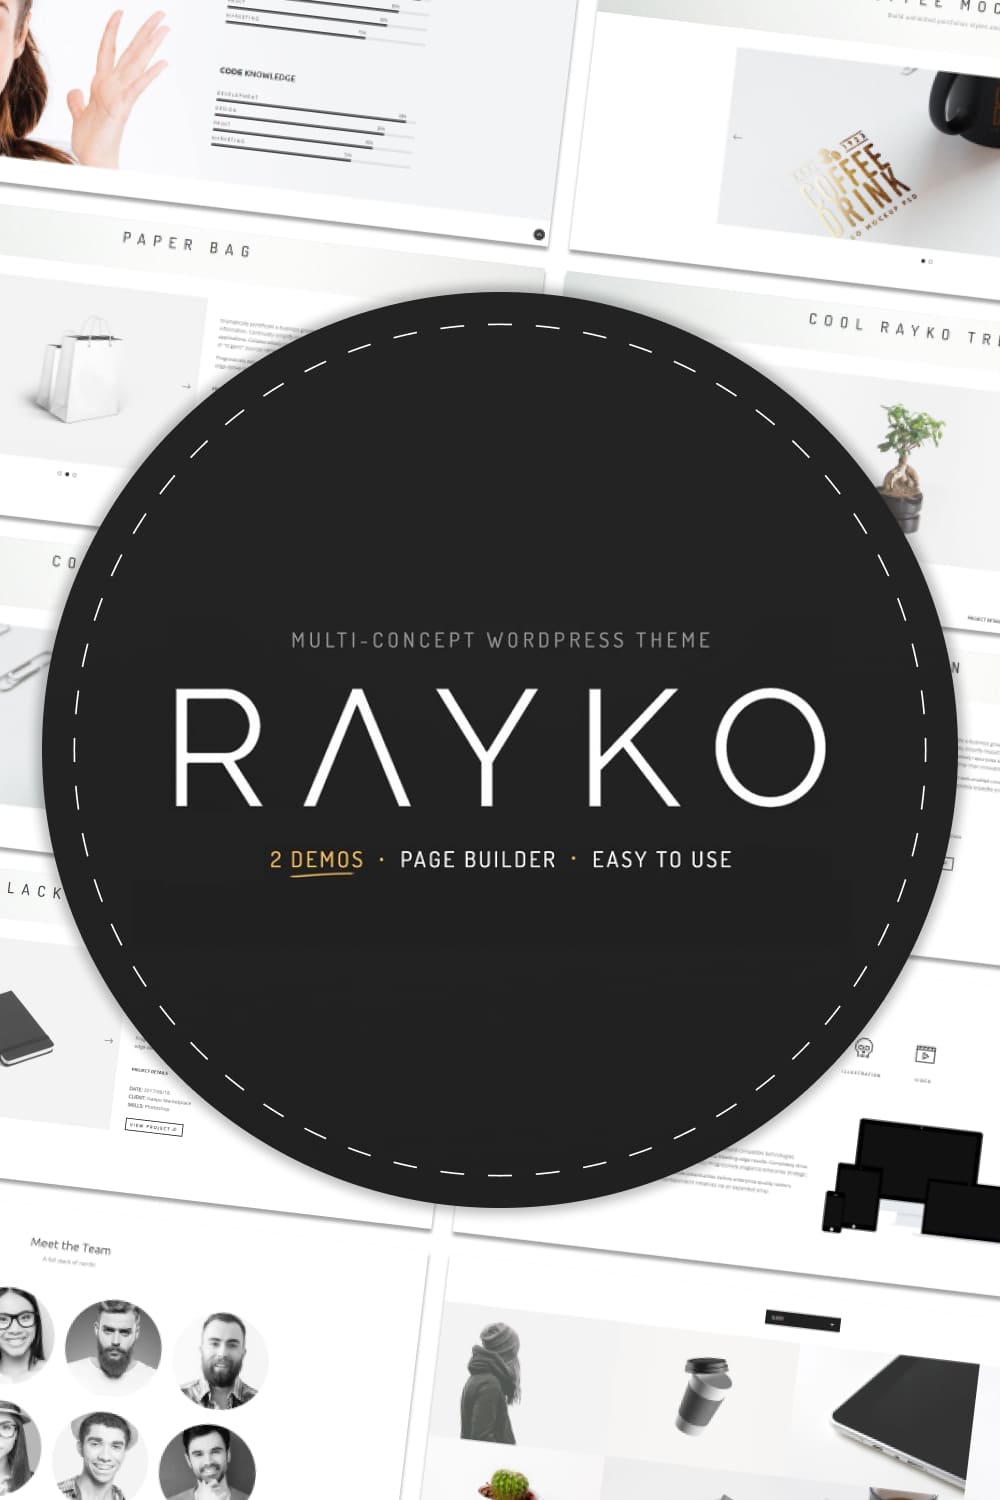 Rayko multi concept wordpress theme.